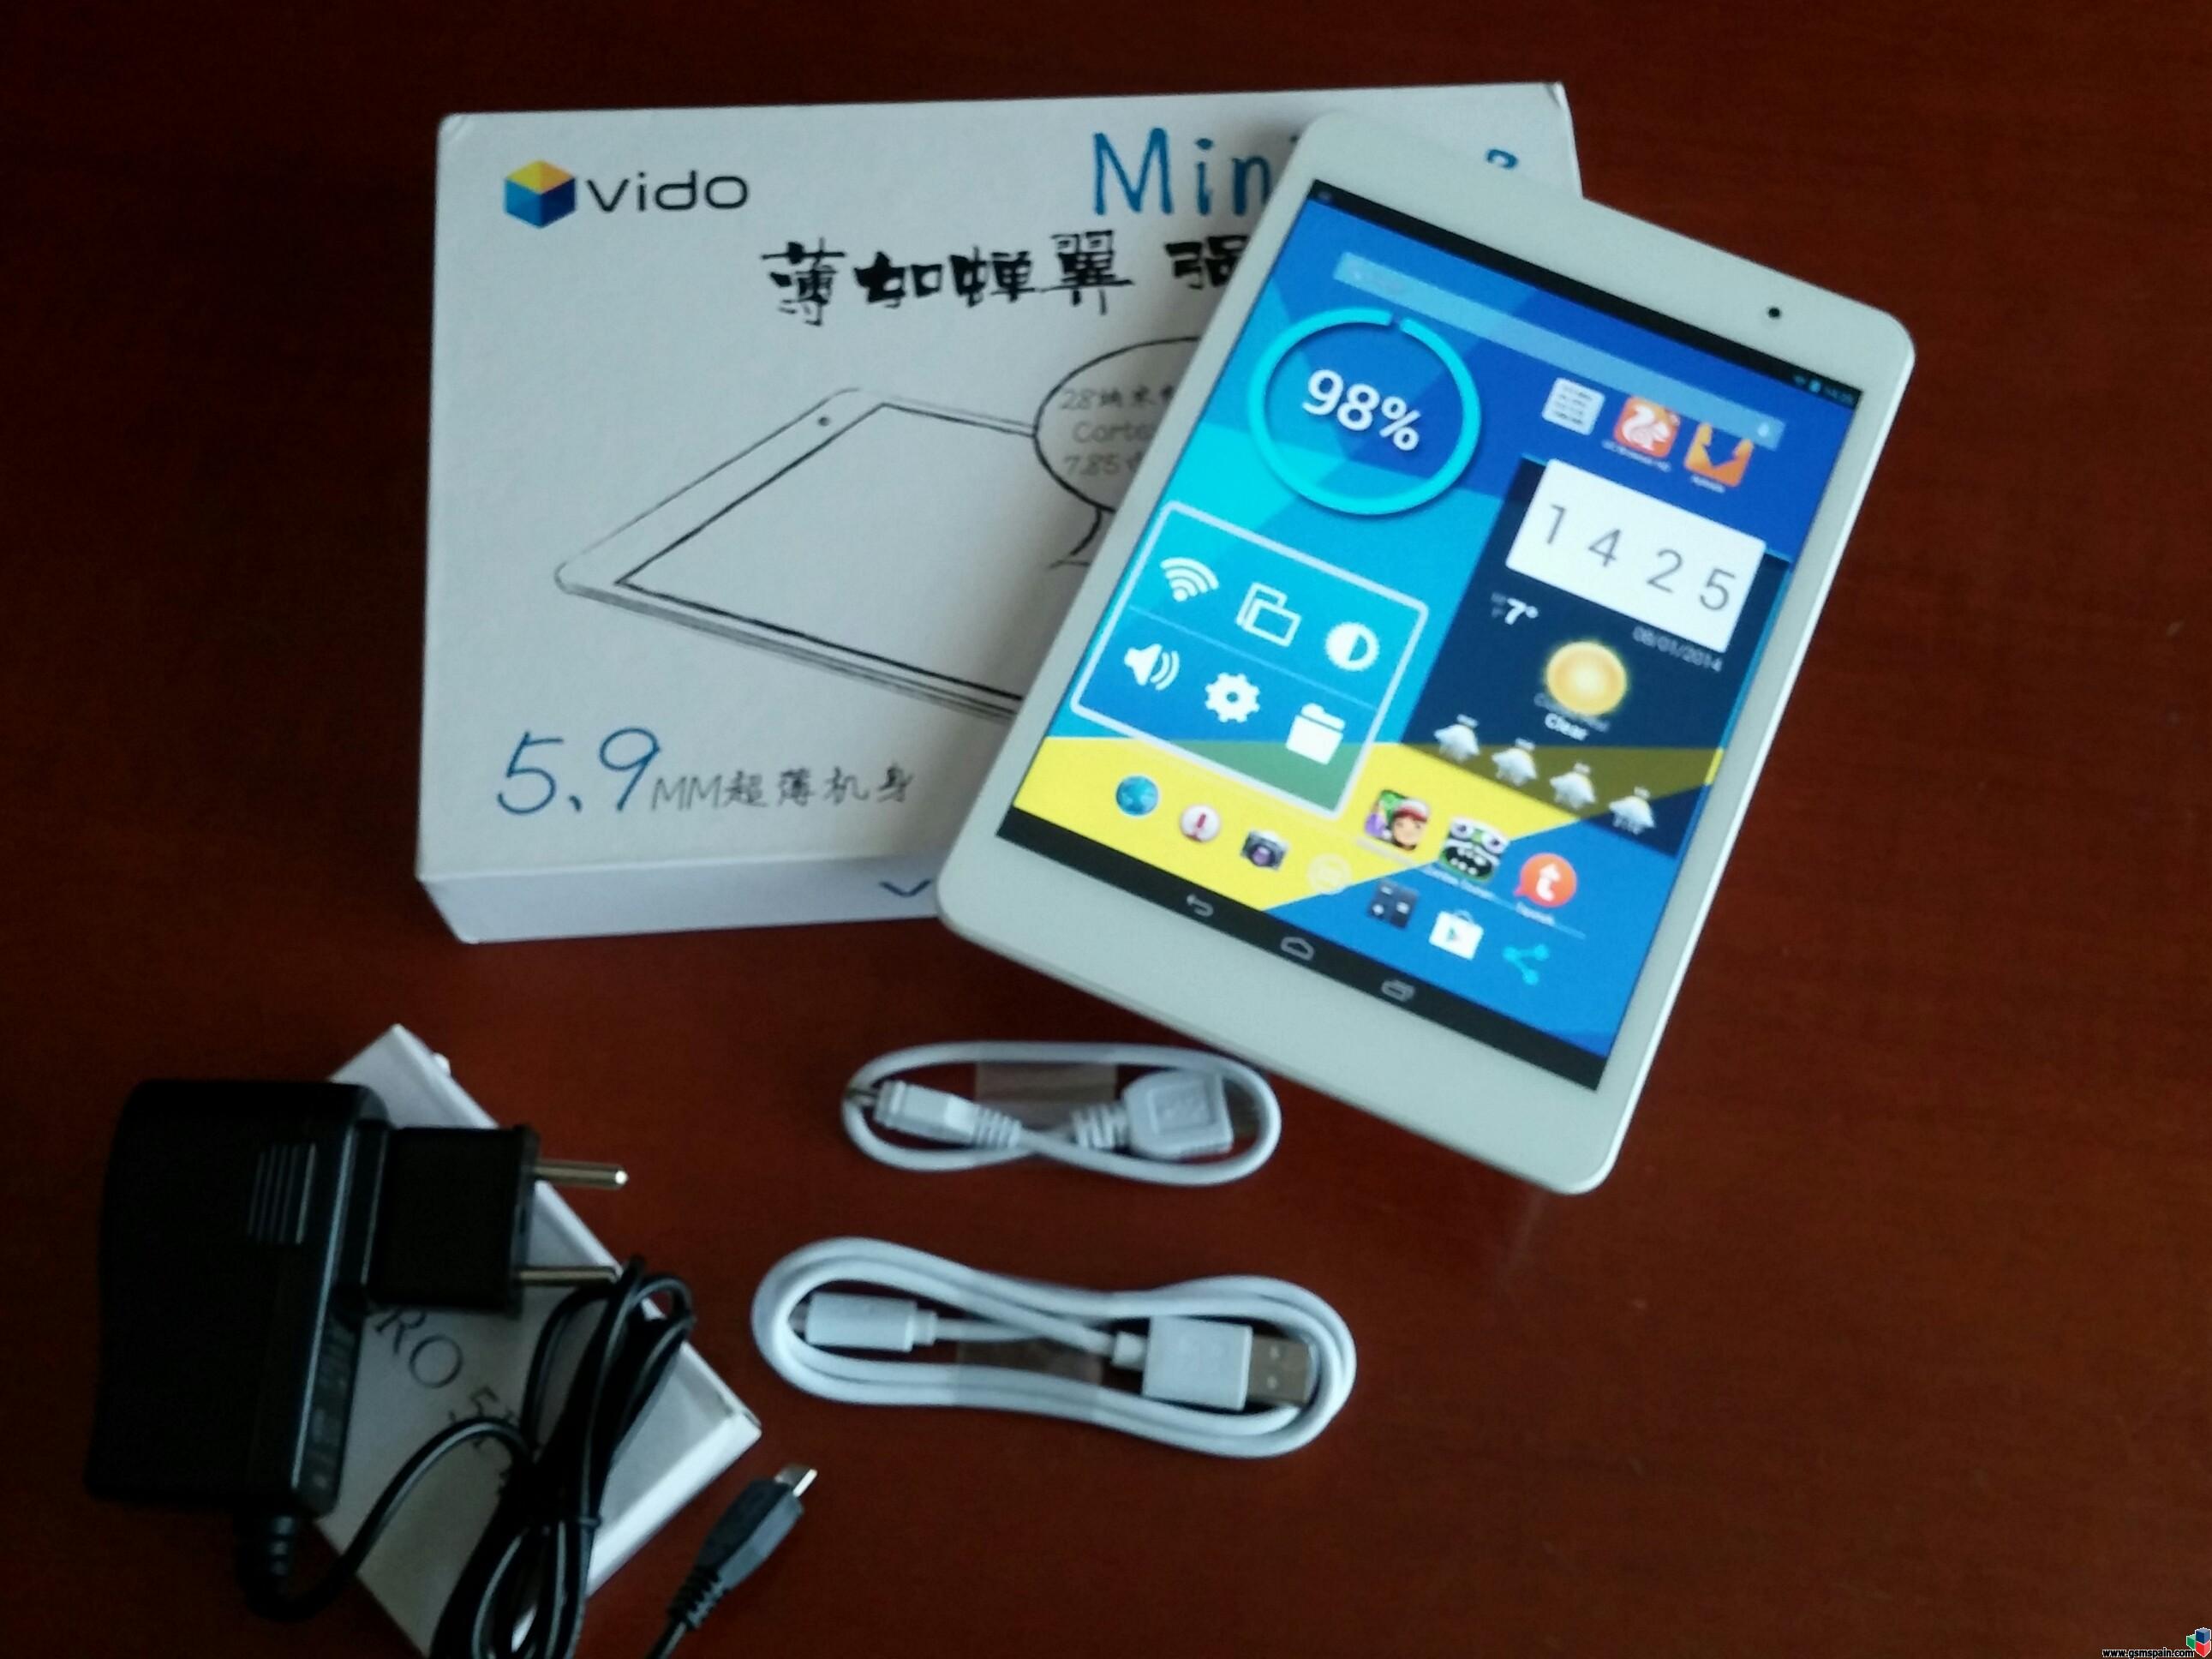 [VENDO] Tablet Yuandao Vido Mini One (iPad Mini) - Quad-Core, 2GB RAM - COMO NUEVA